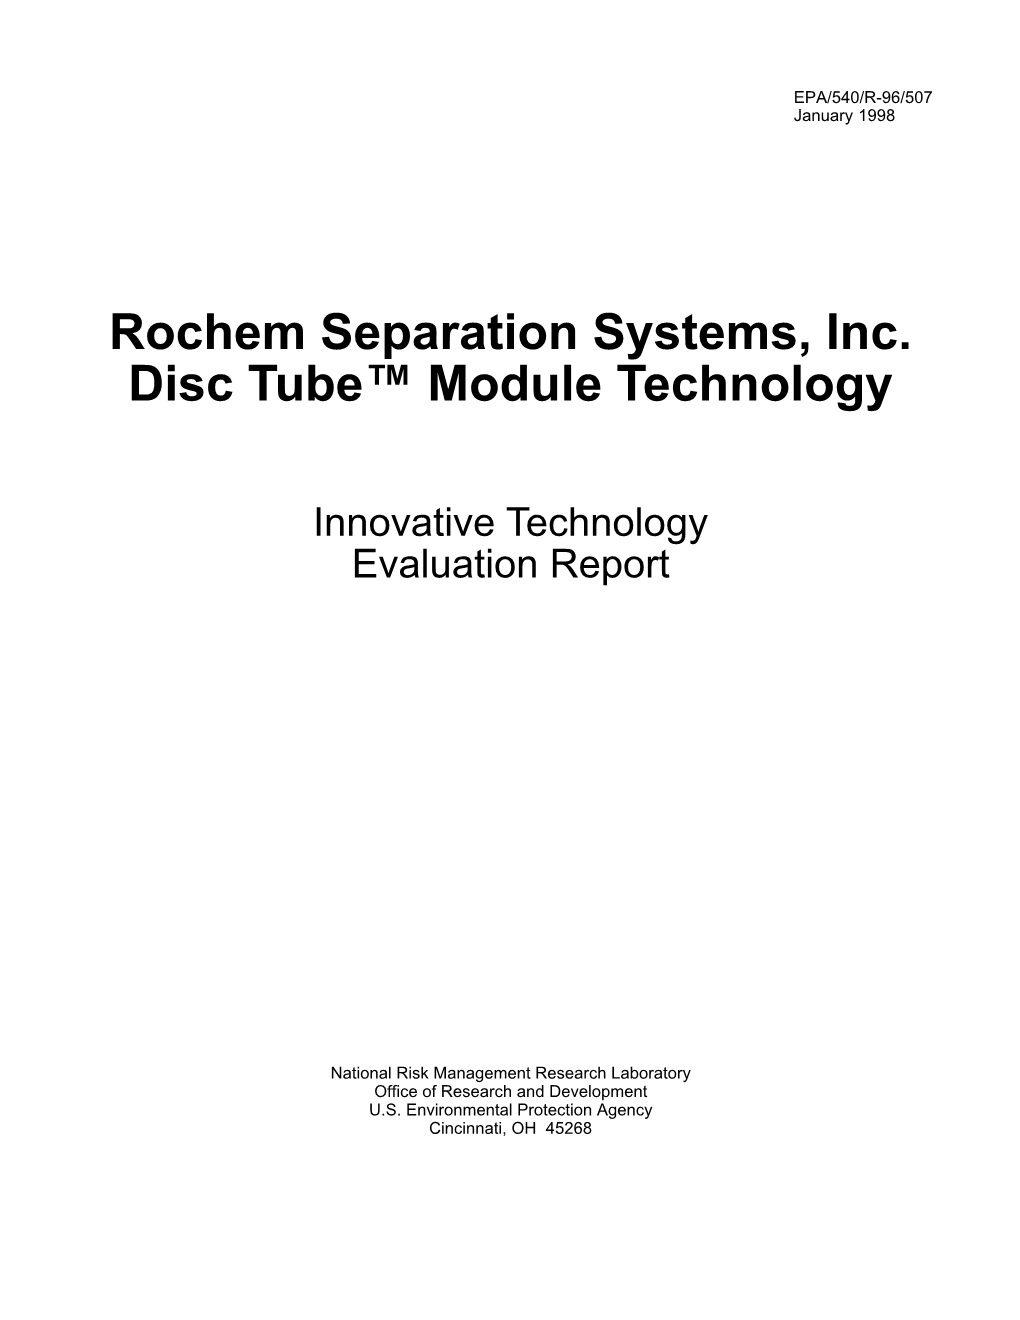 Rochem Separation Systems, Inc. Disc Tube™ Module Technology